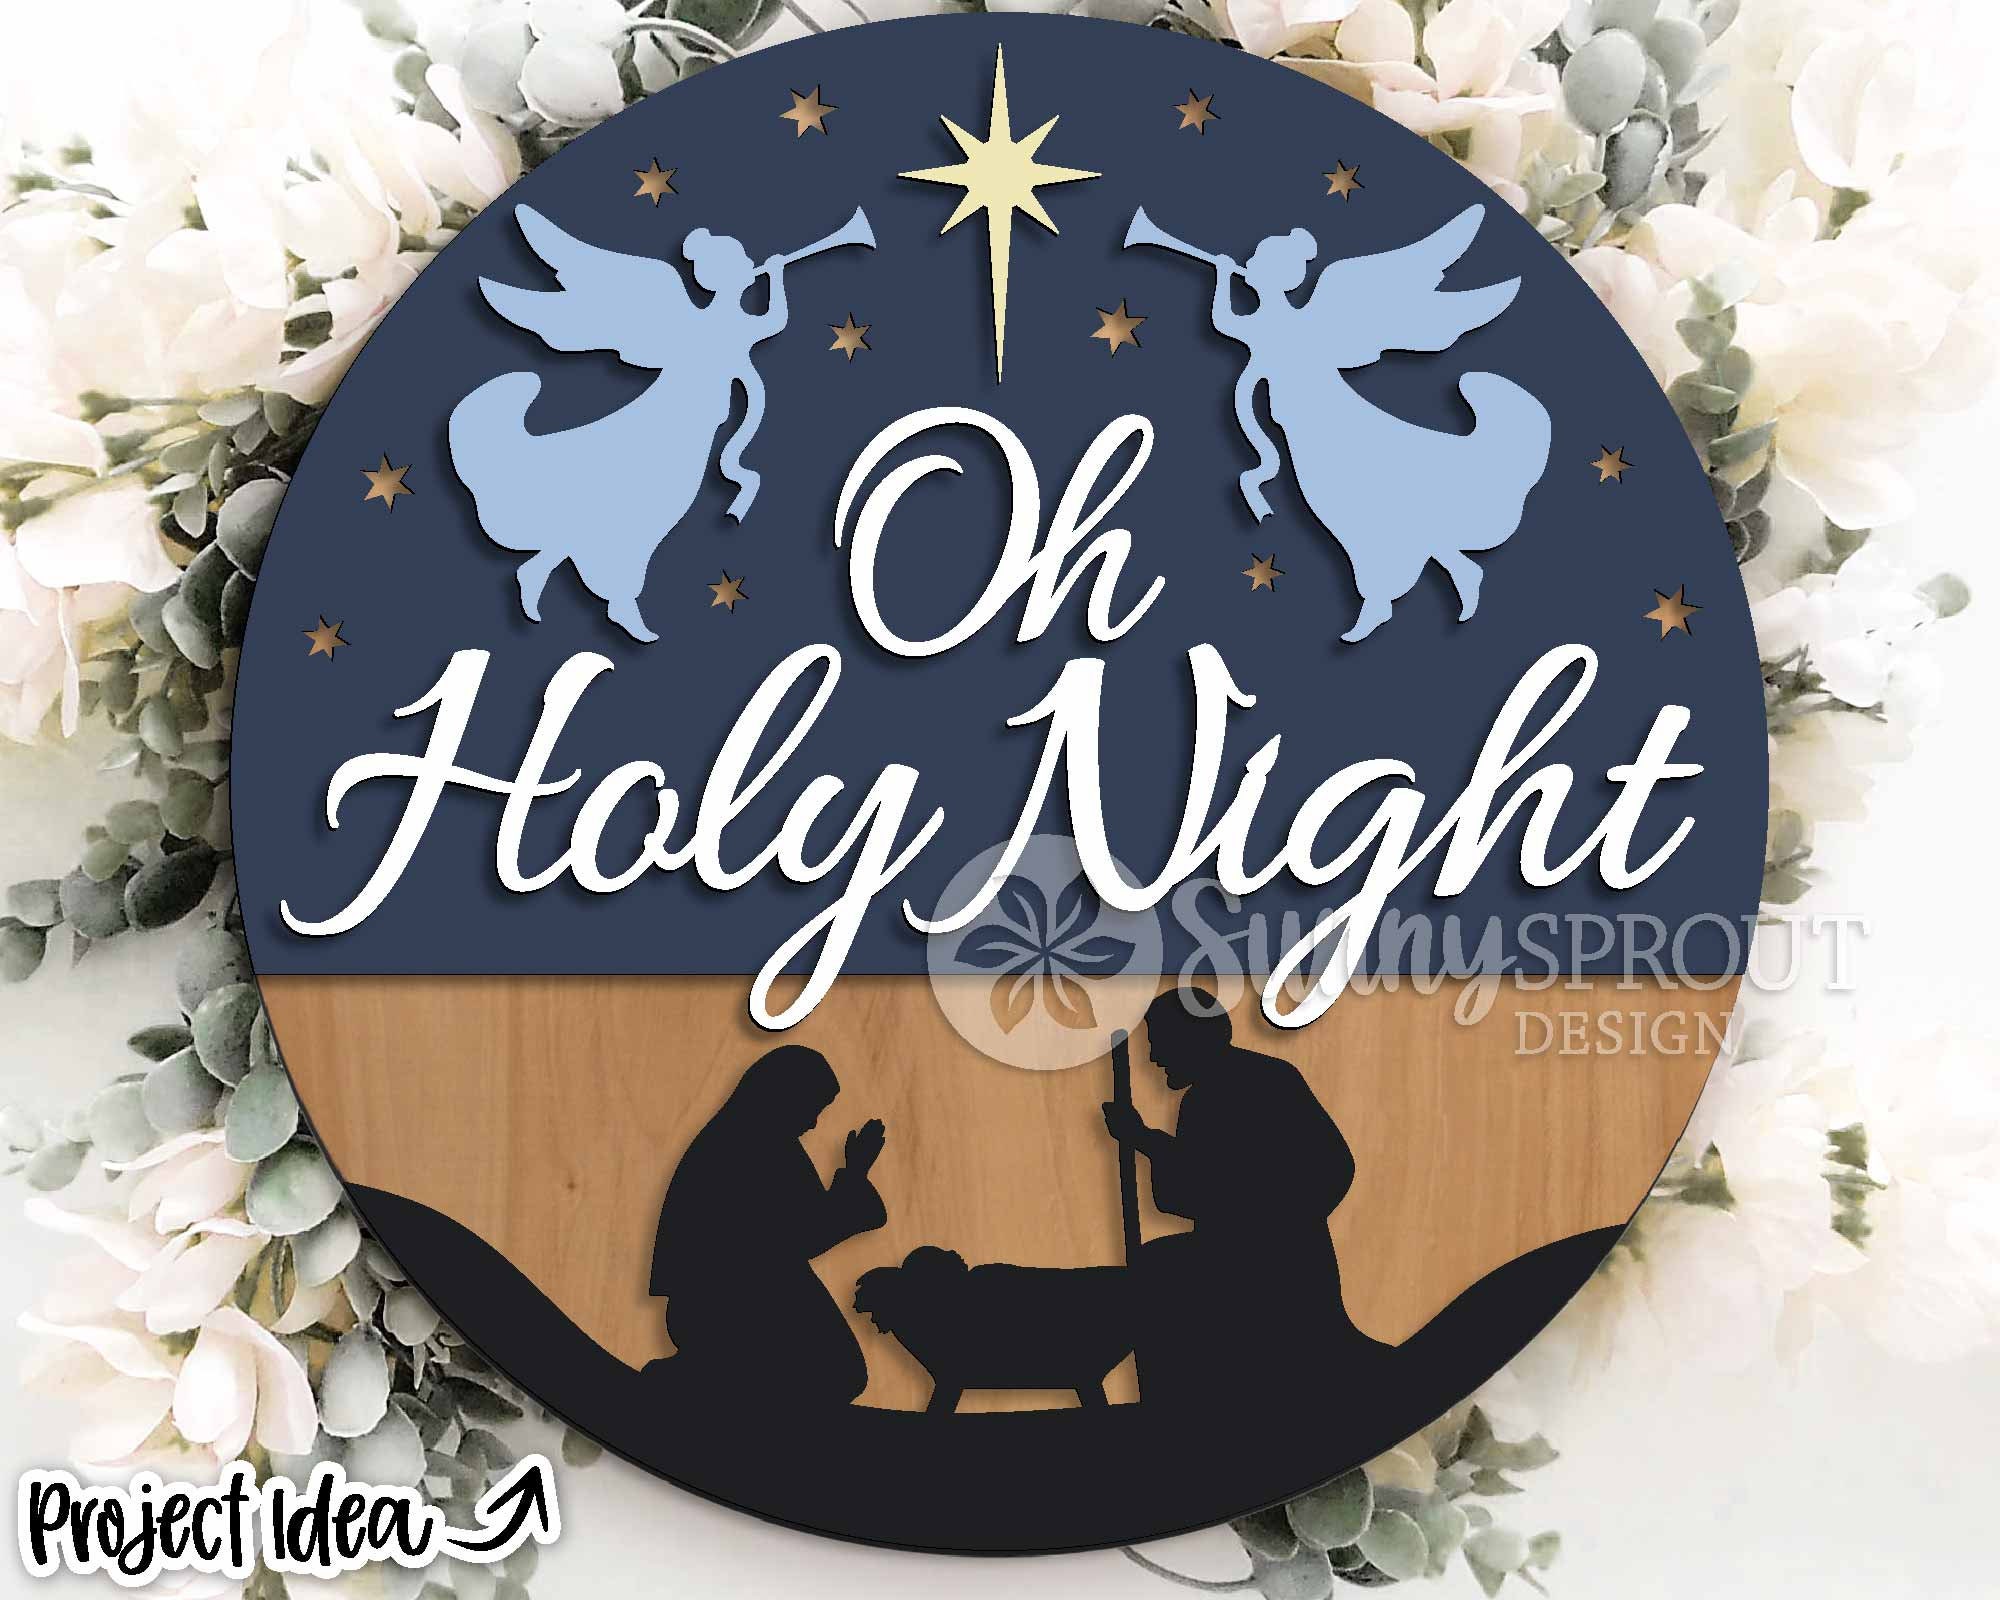 O Holy Night Nativity Stencil